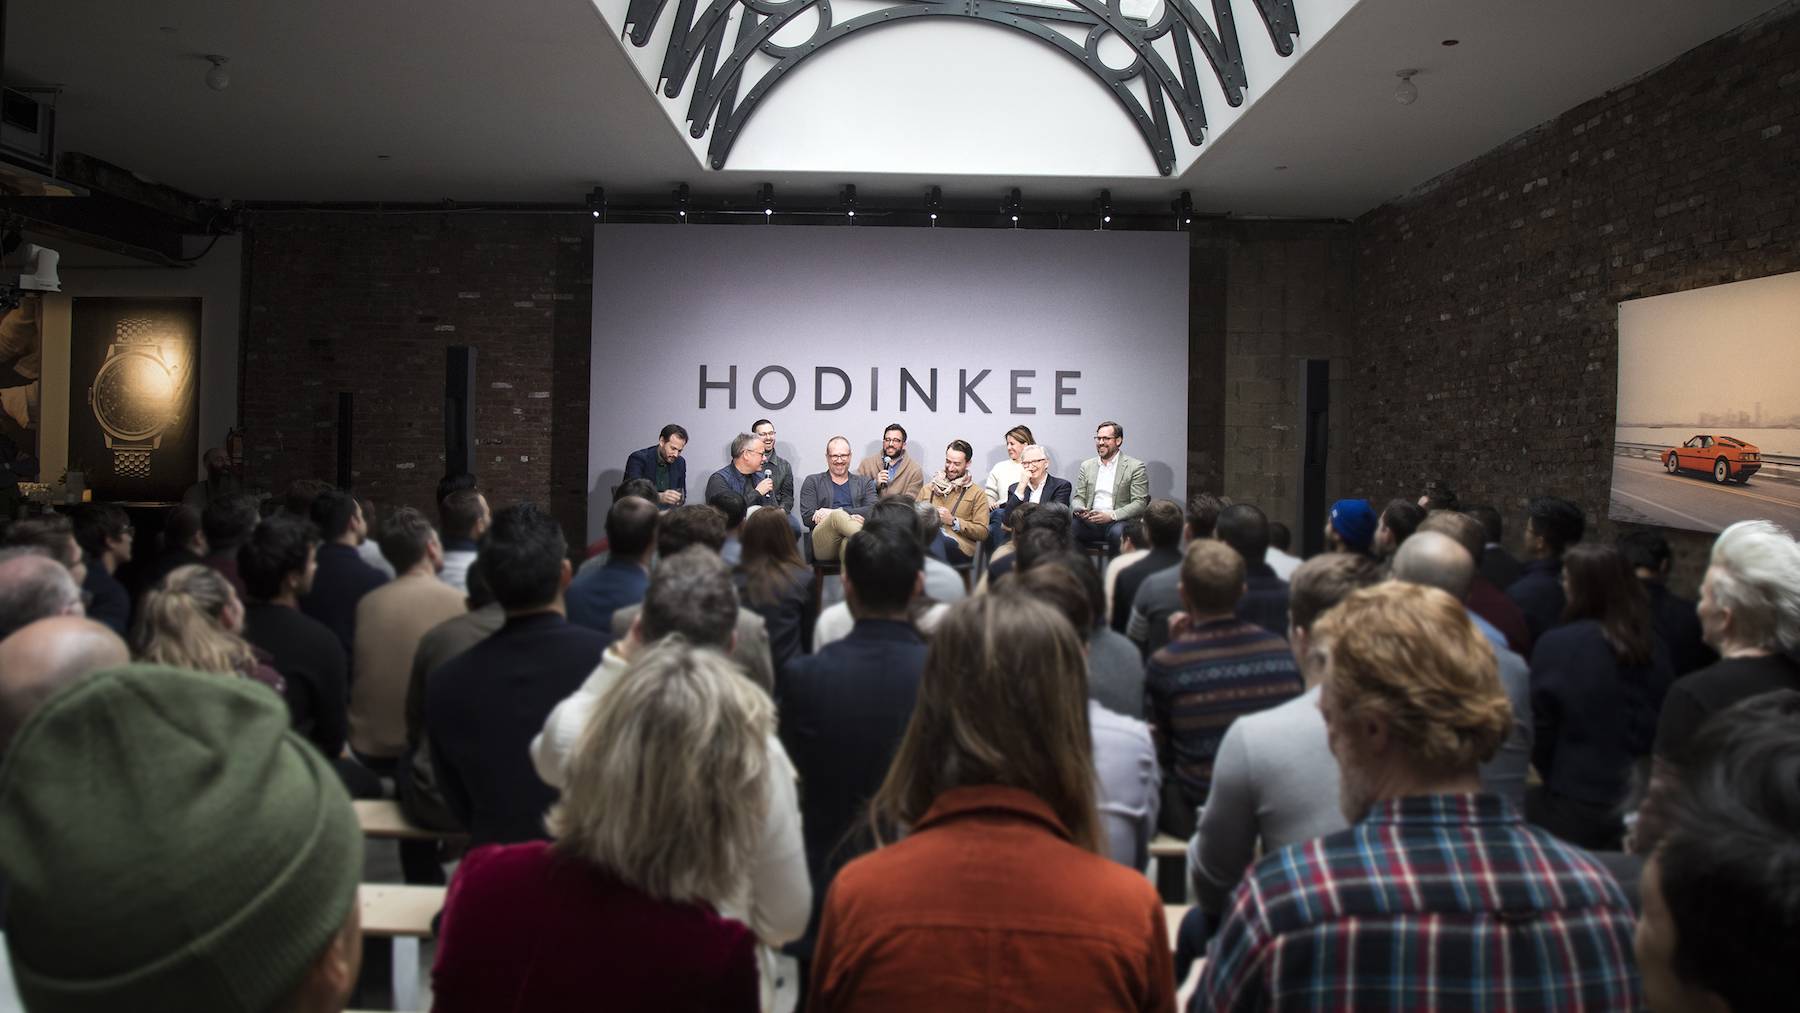 Panel event at Hodinkee.